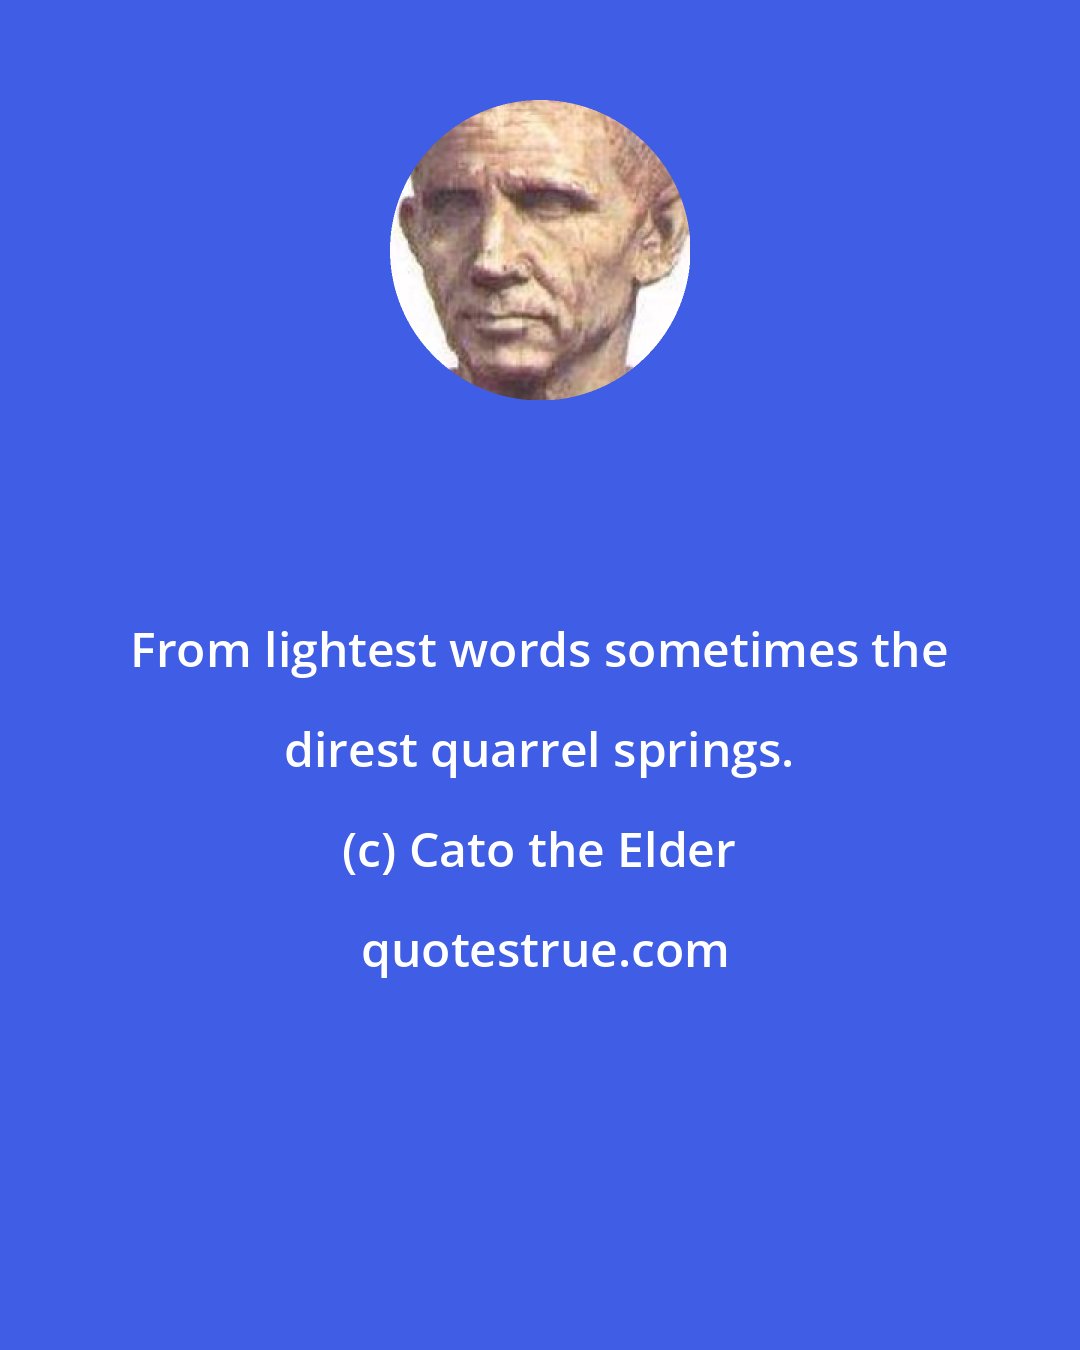 Cato the Elder: From lightest words sometimes the direst quarrel springs.